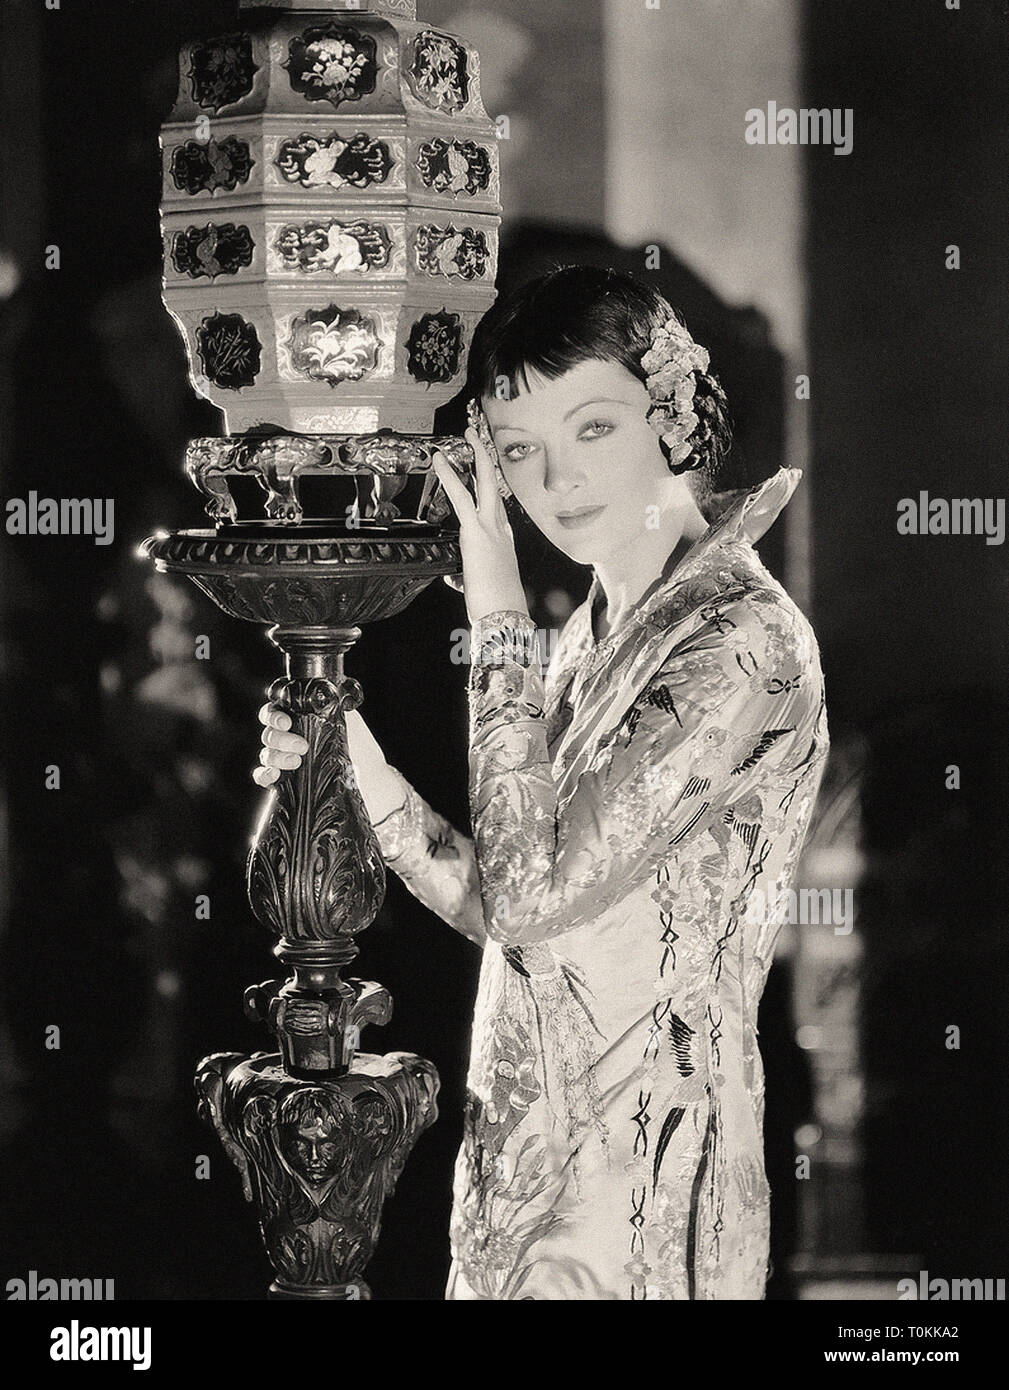 Actress Myrna Loy in "The Mask of Fu Manchu" 1932 Celebrity Photo Print 